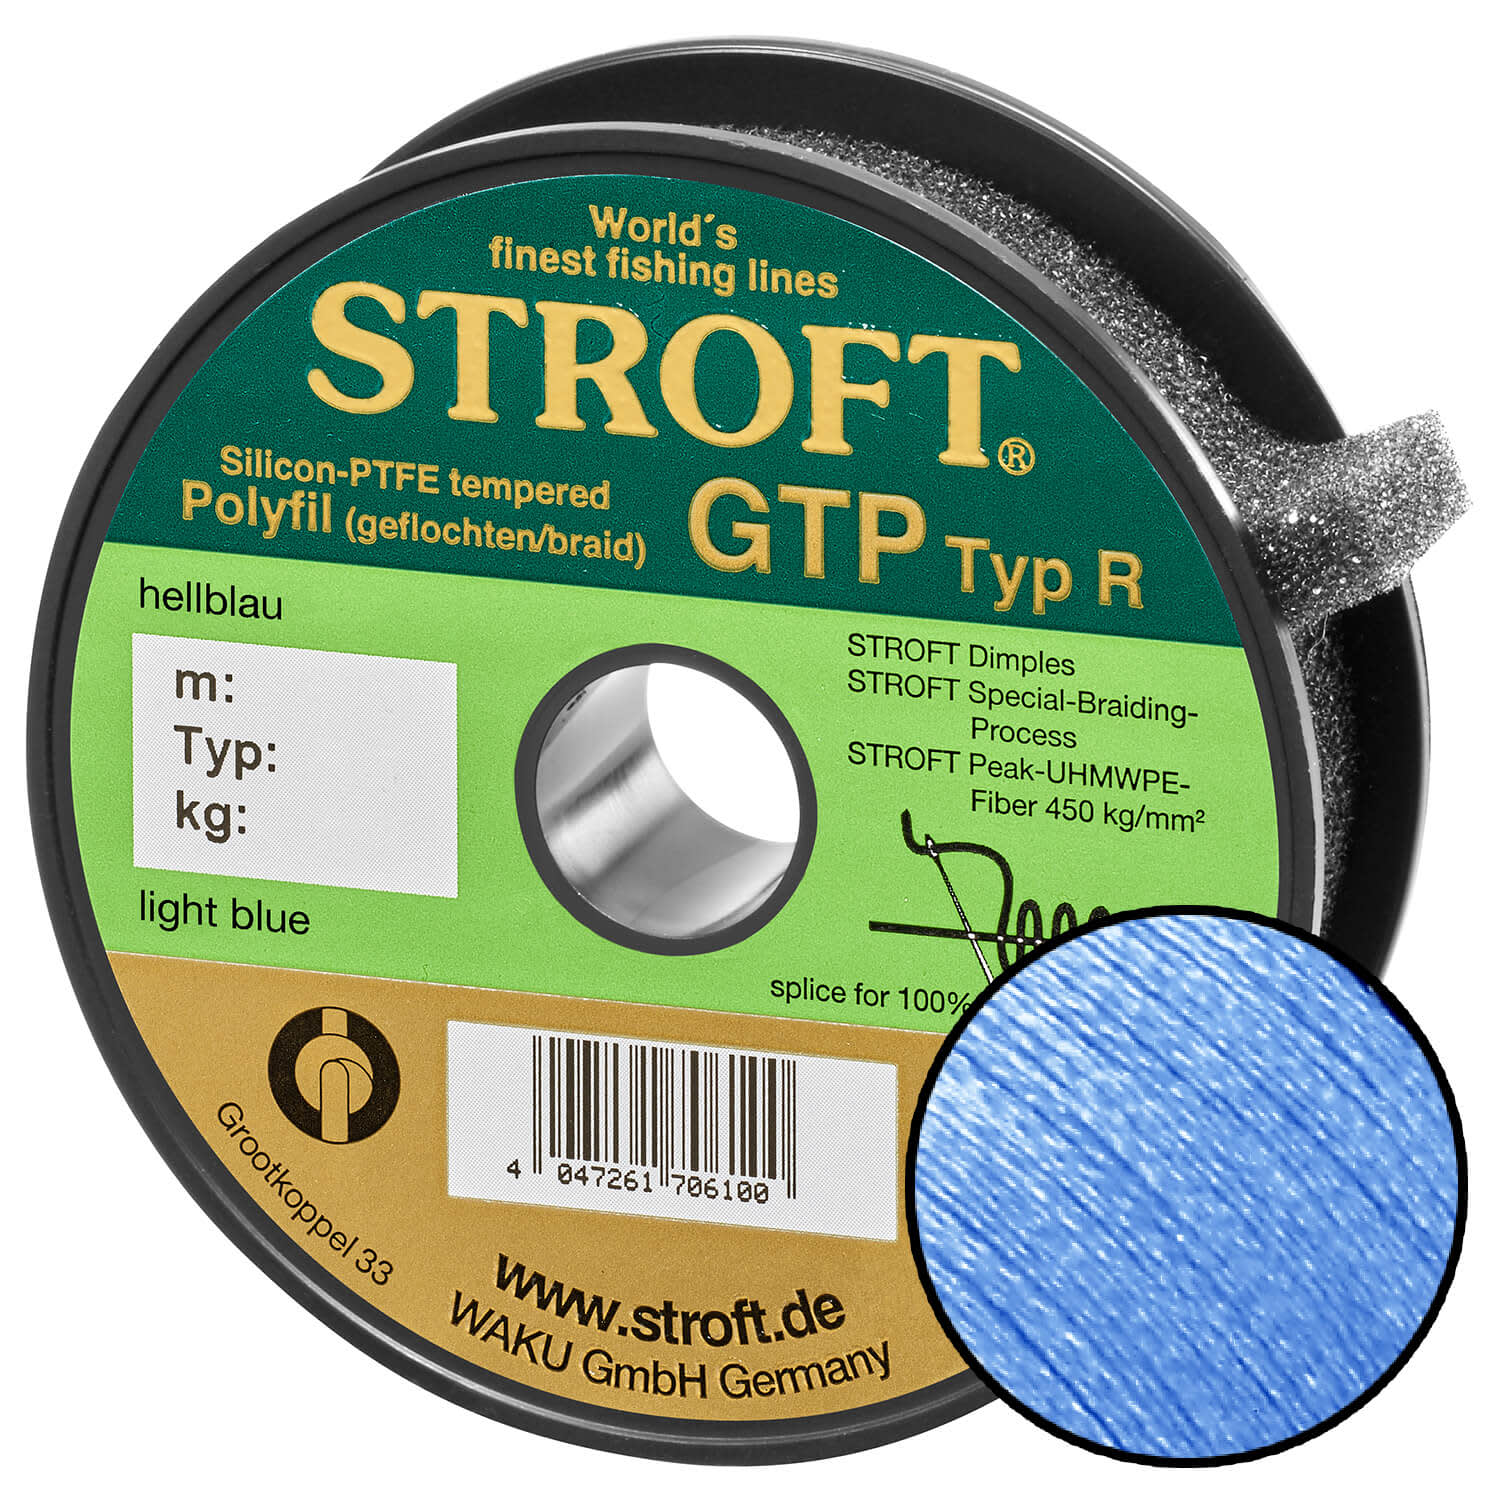 STROFT GTP Type R Braided Fishing Line 125m light blue buy by